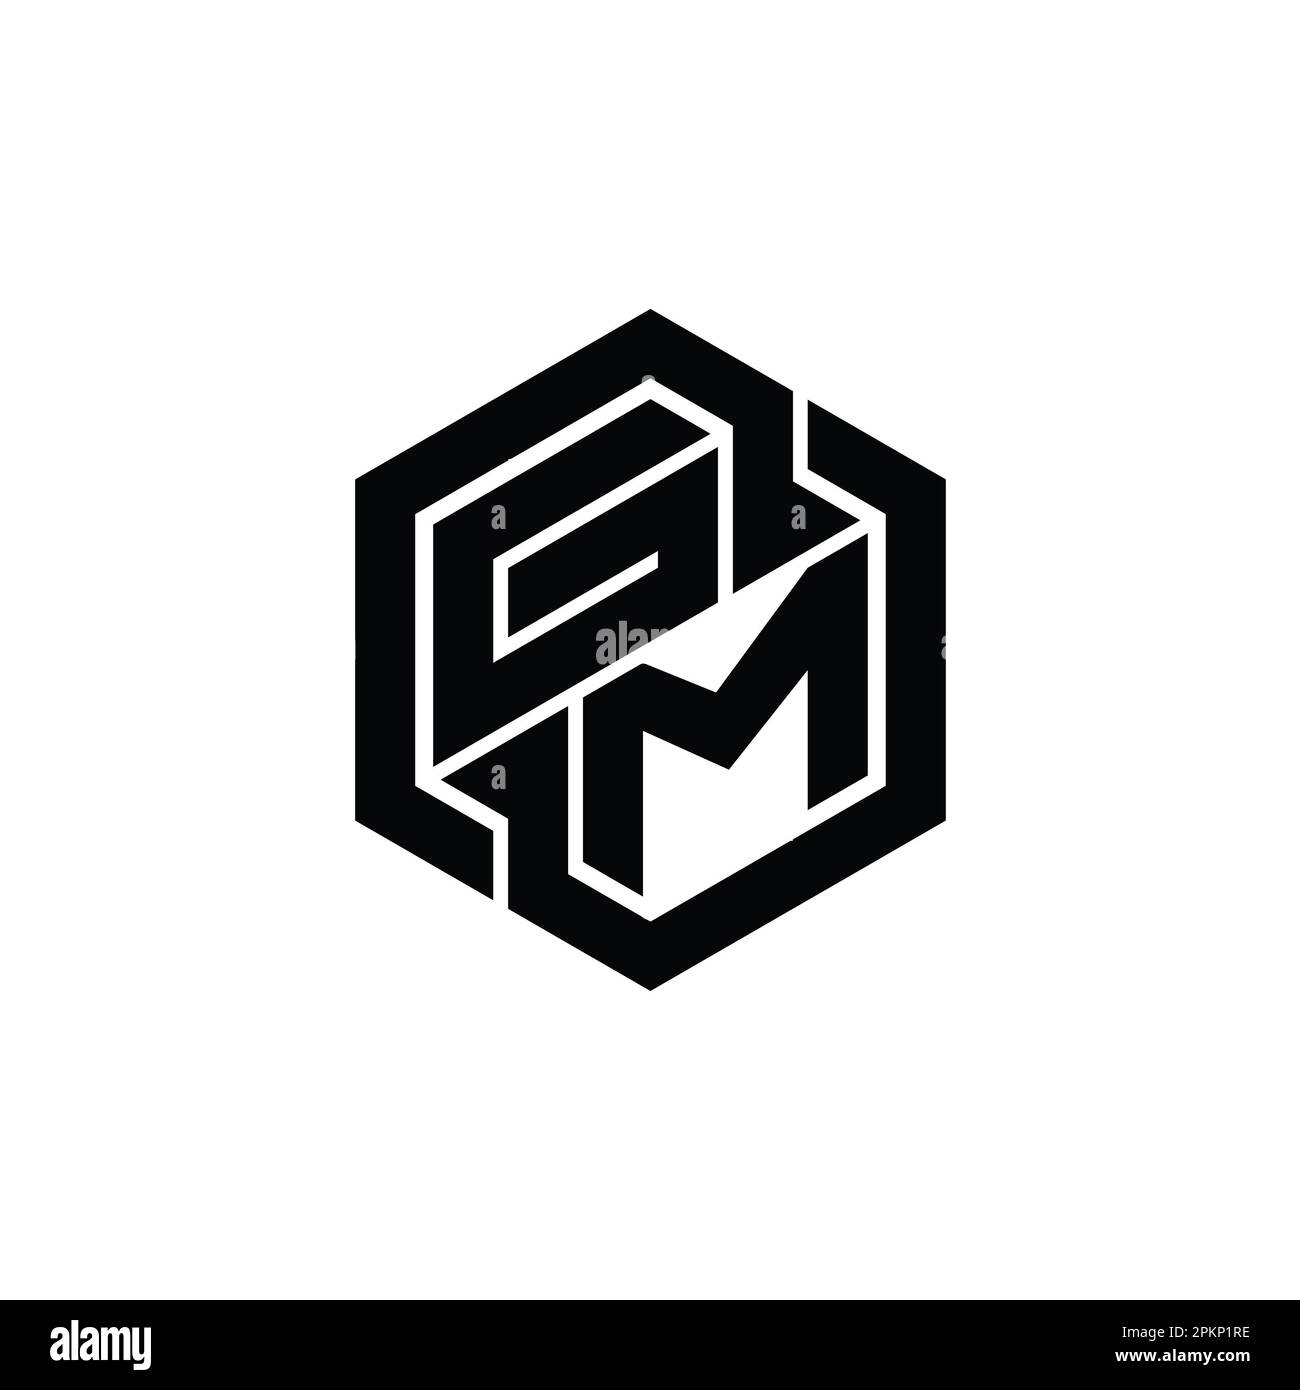 GM logo monogram with emblem shape combination tringle on top design  template Stock Vector